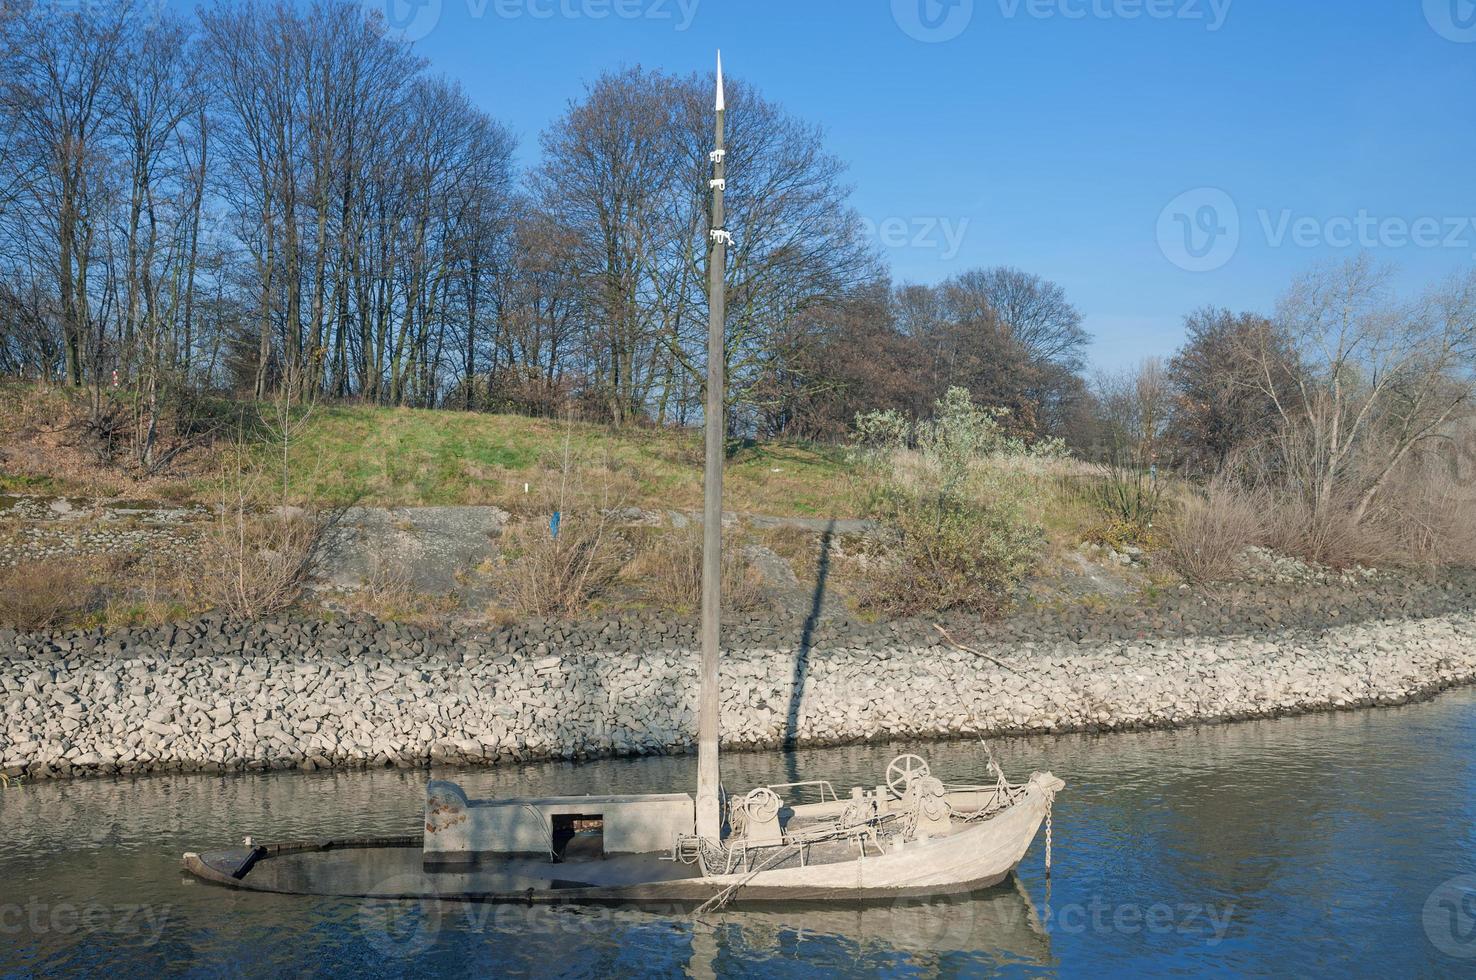 barco de pesca de enguia histórico afundado chamado aalschokker, barco de pesca tradicional no rio reno, na renânia, alemanha foto